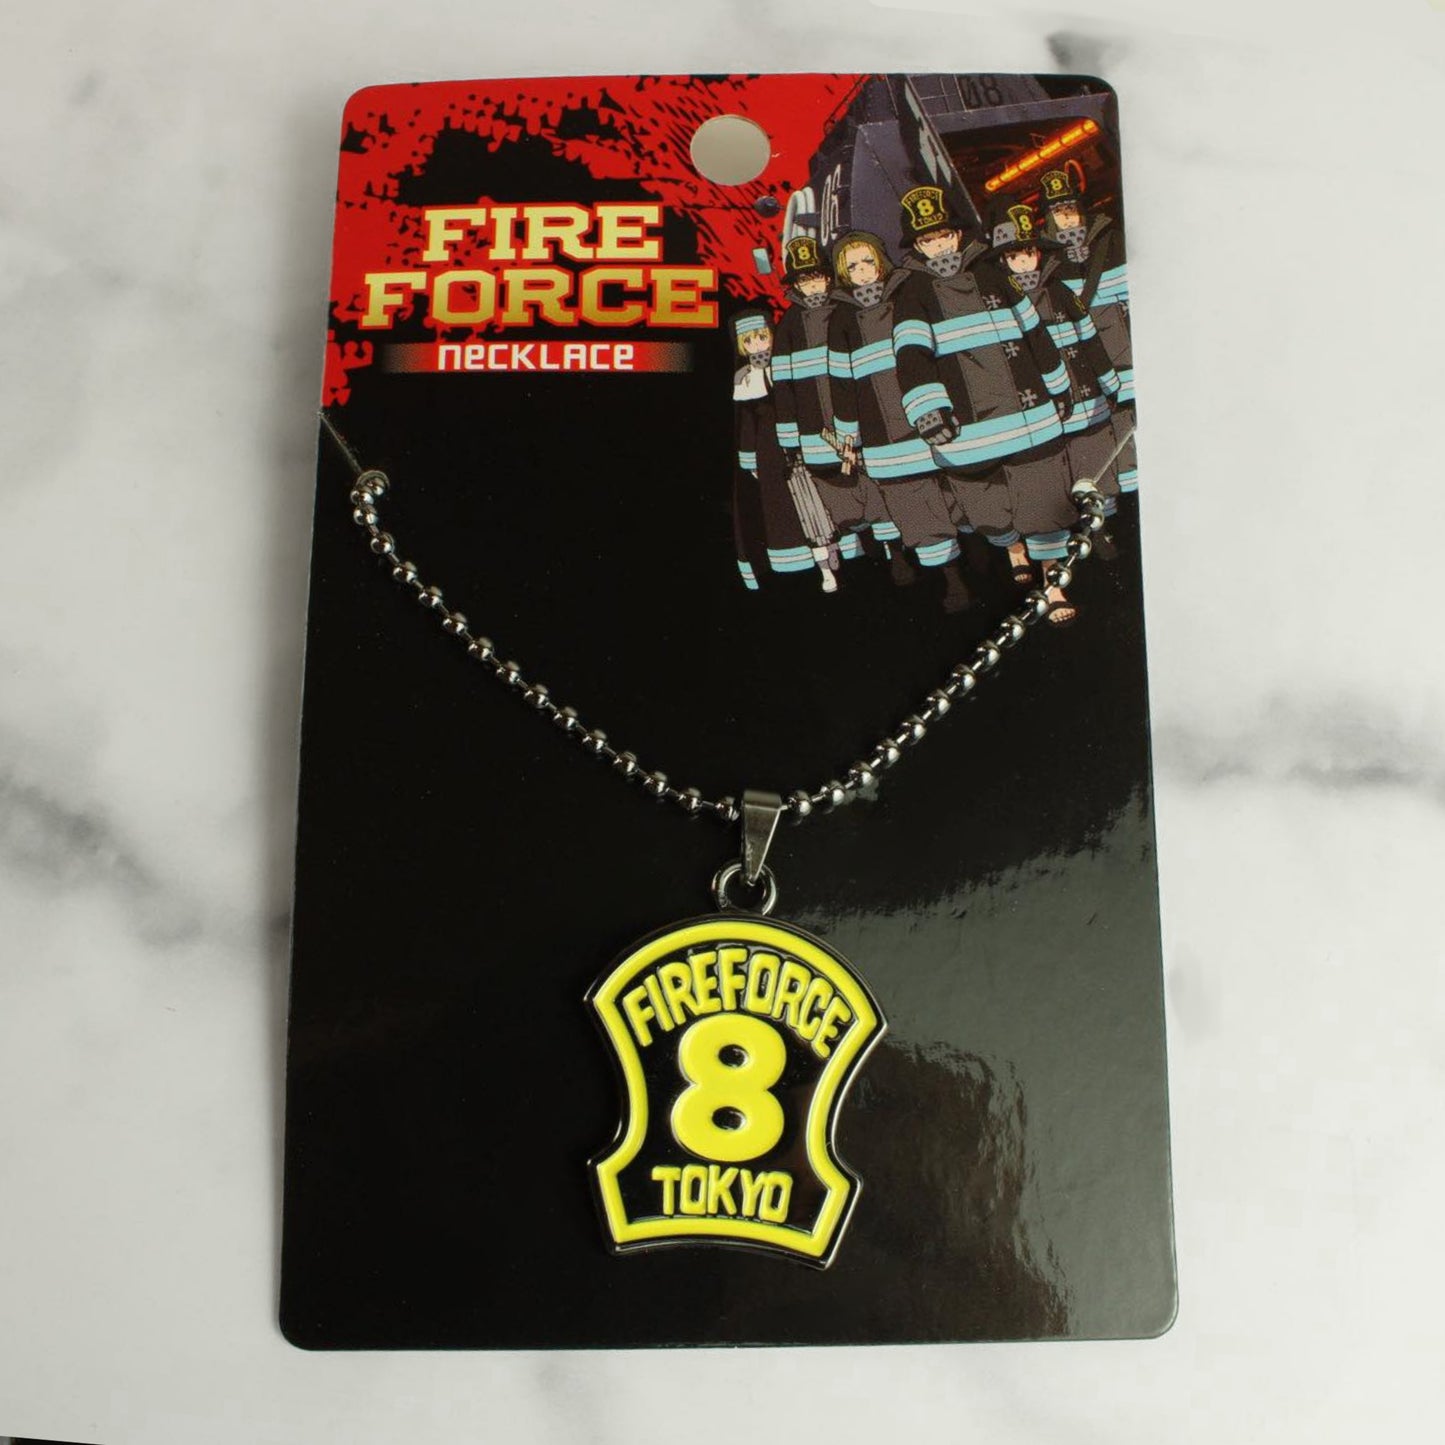 Fire Force Company 8 (Fire Force) Enamel Pendant Necklace